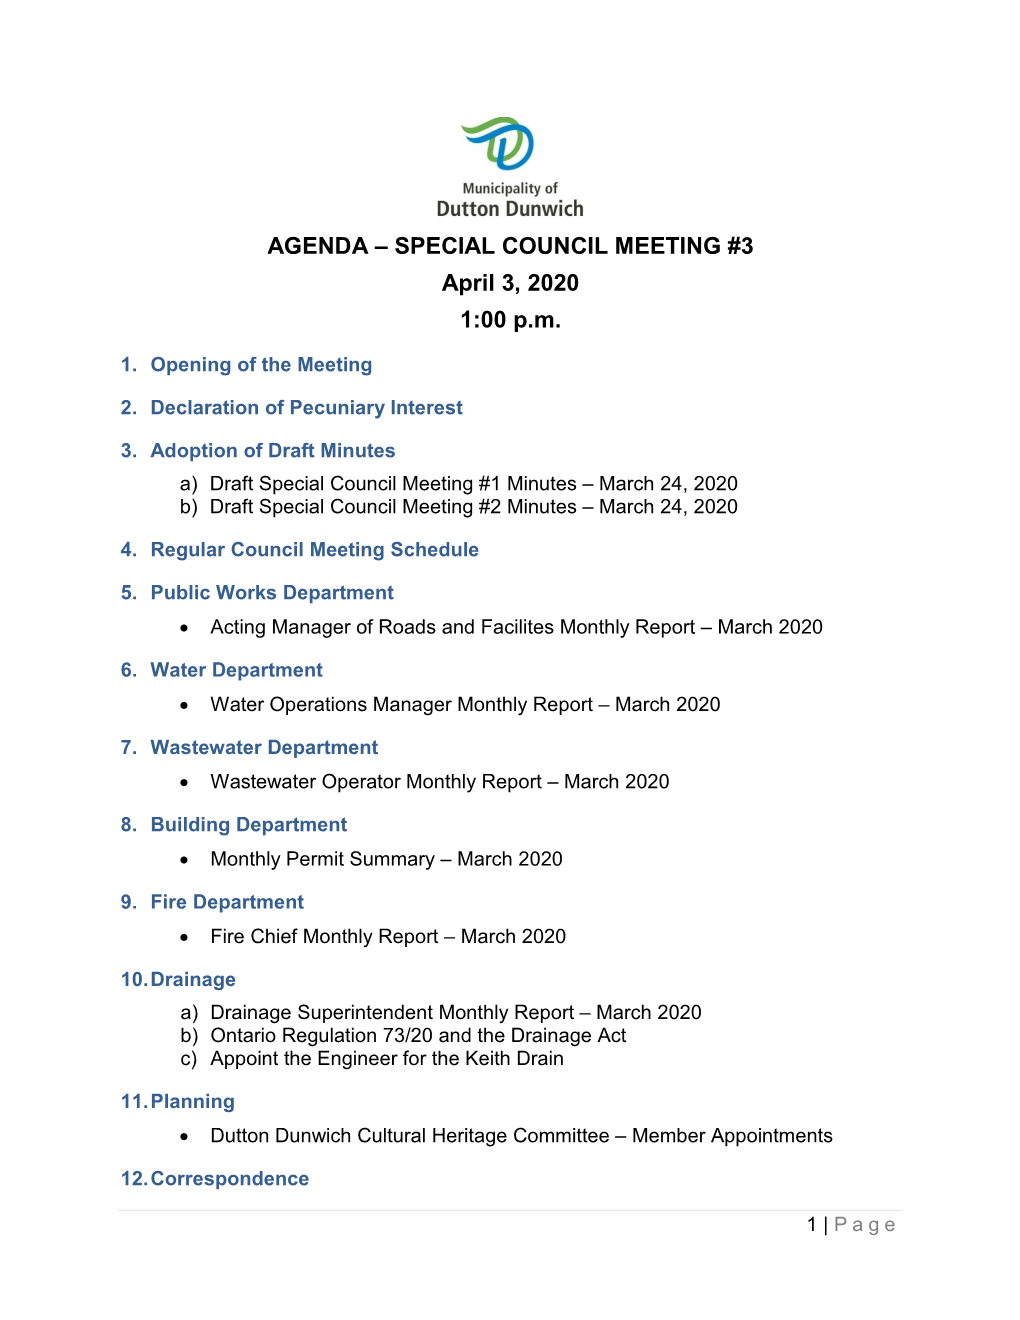 AGENDA – SPECIAL COUNCIL MEETING #3 April 3, 2020 1:00 P.M